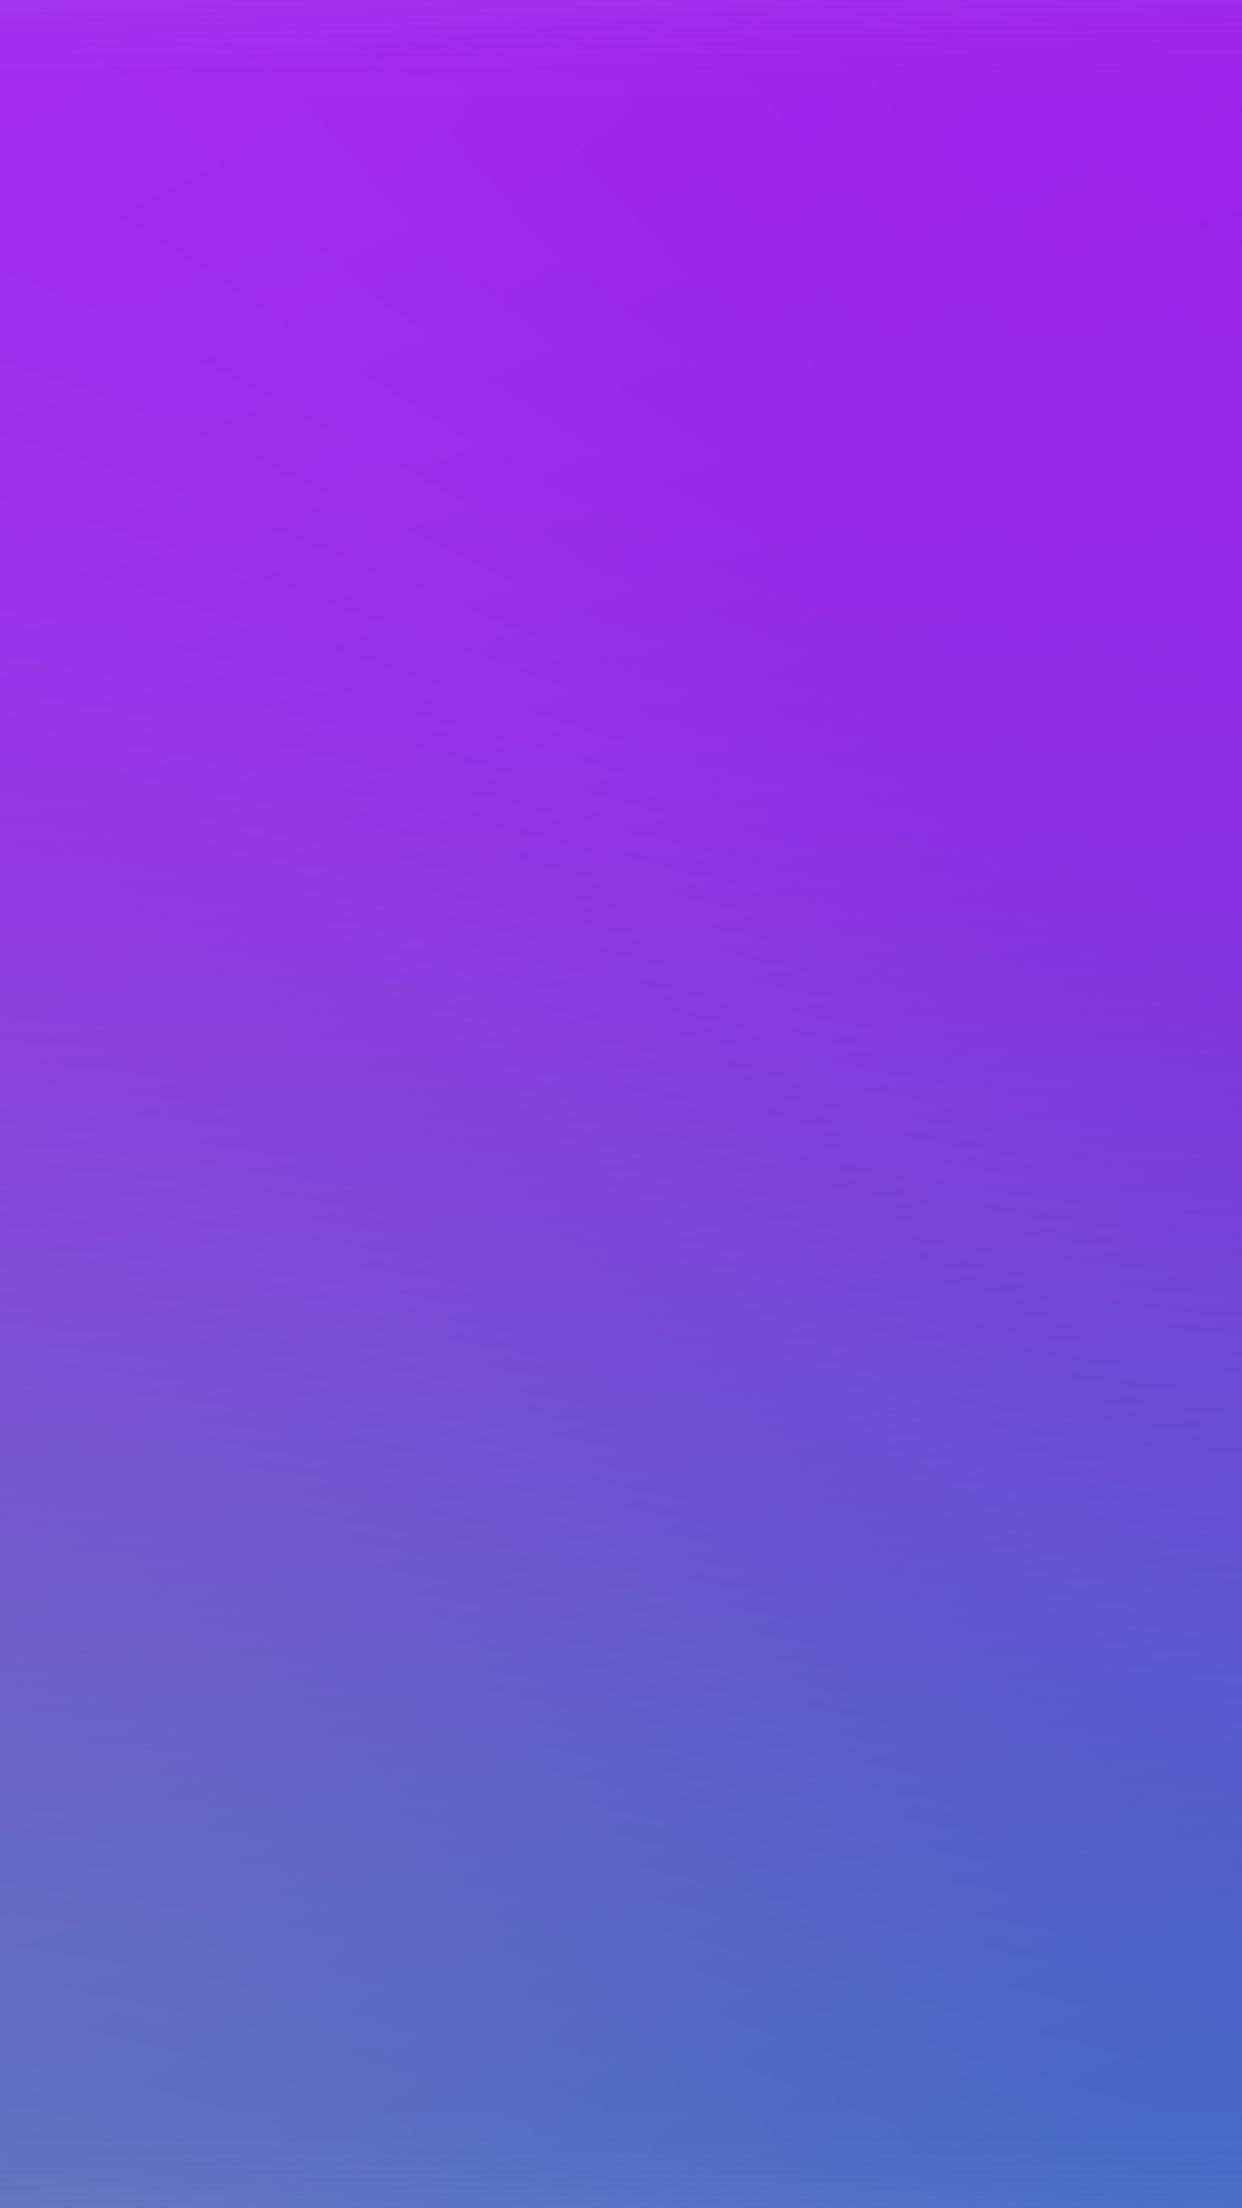 Purple blue blur gradation Download Free HD Wallpaper for iPhone 6s, 8